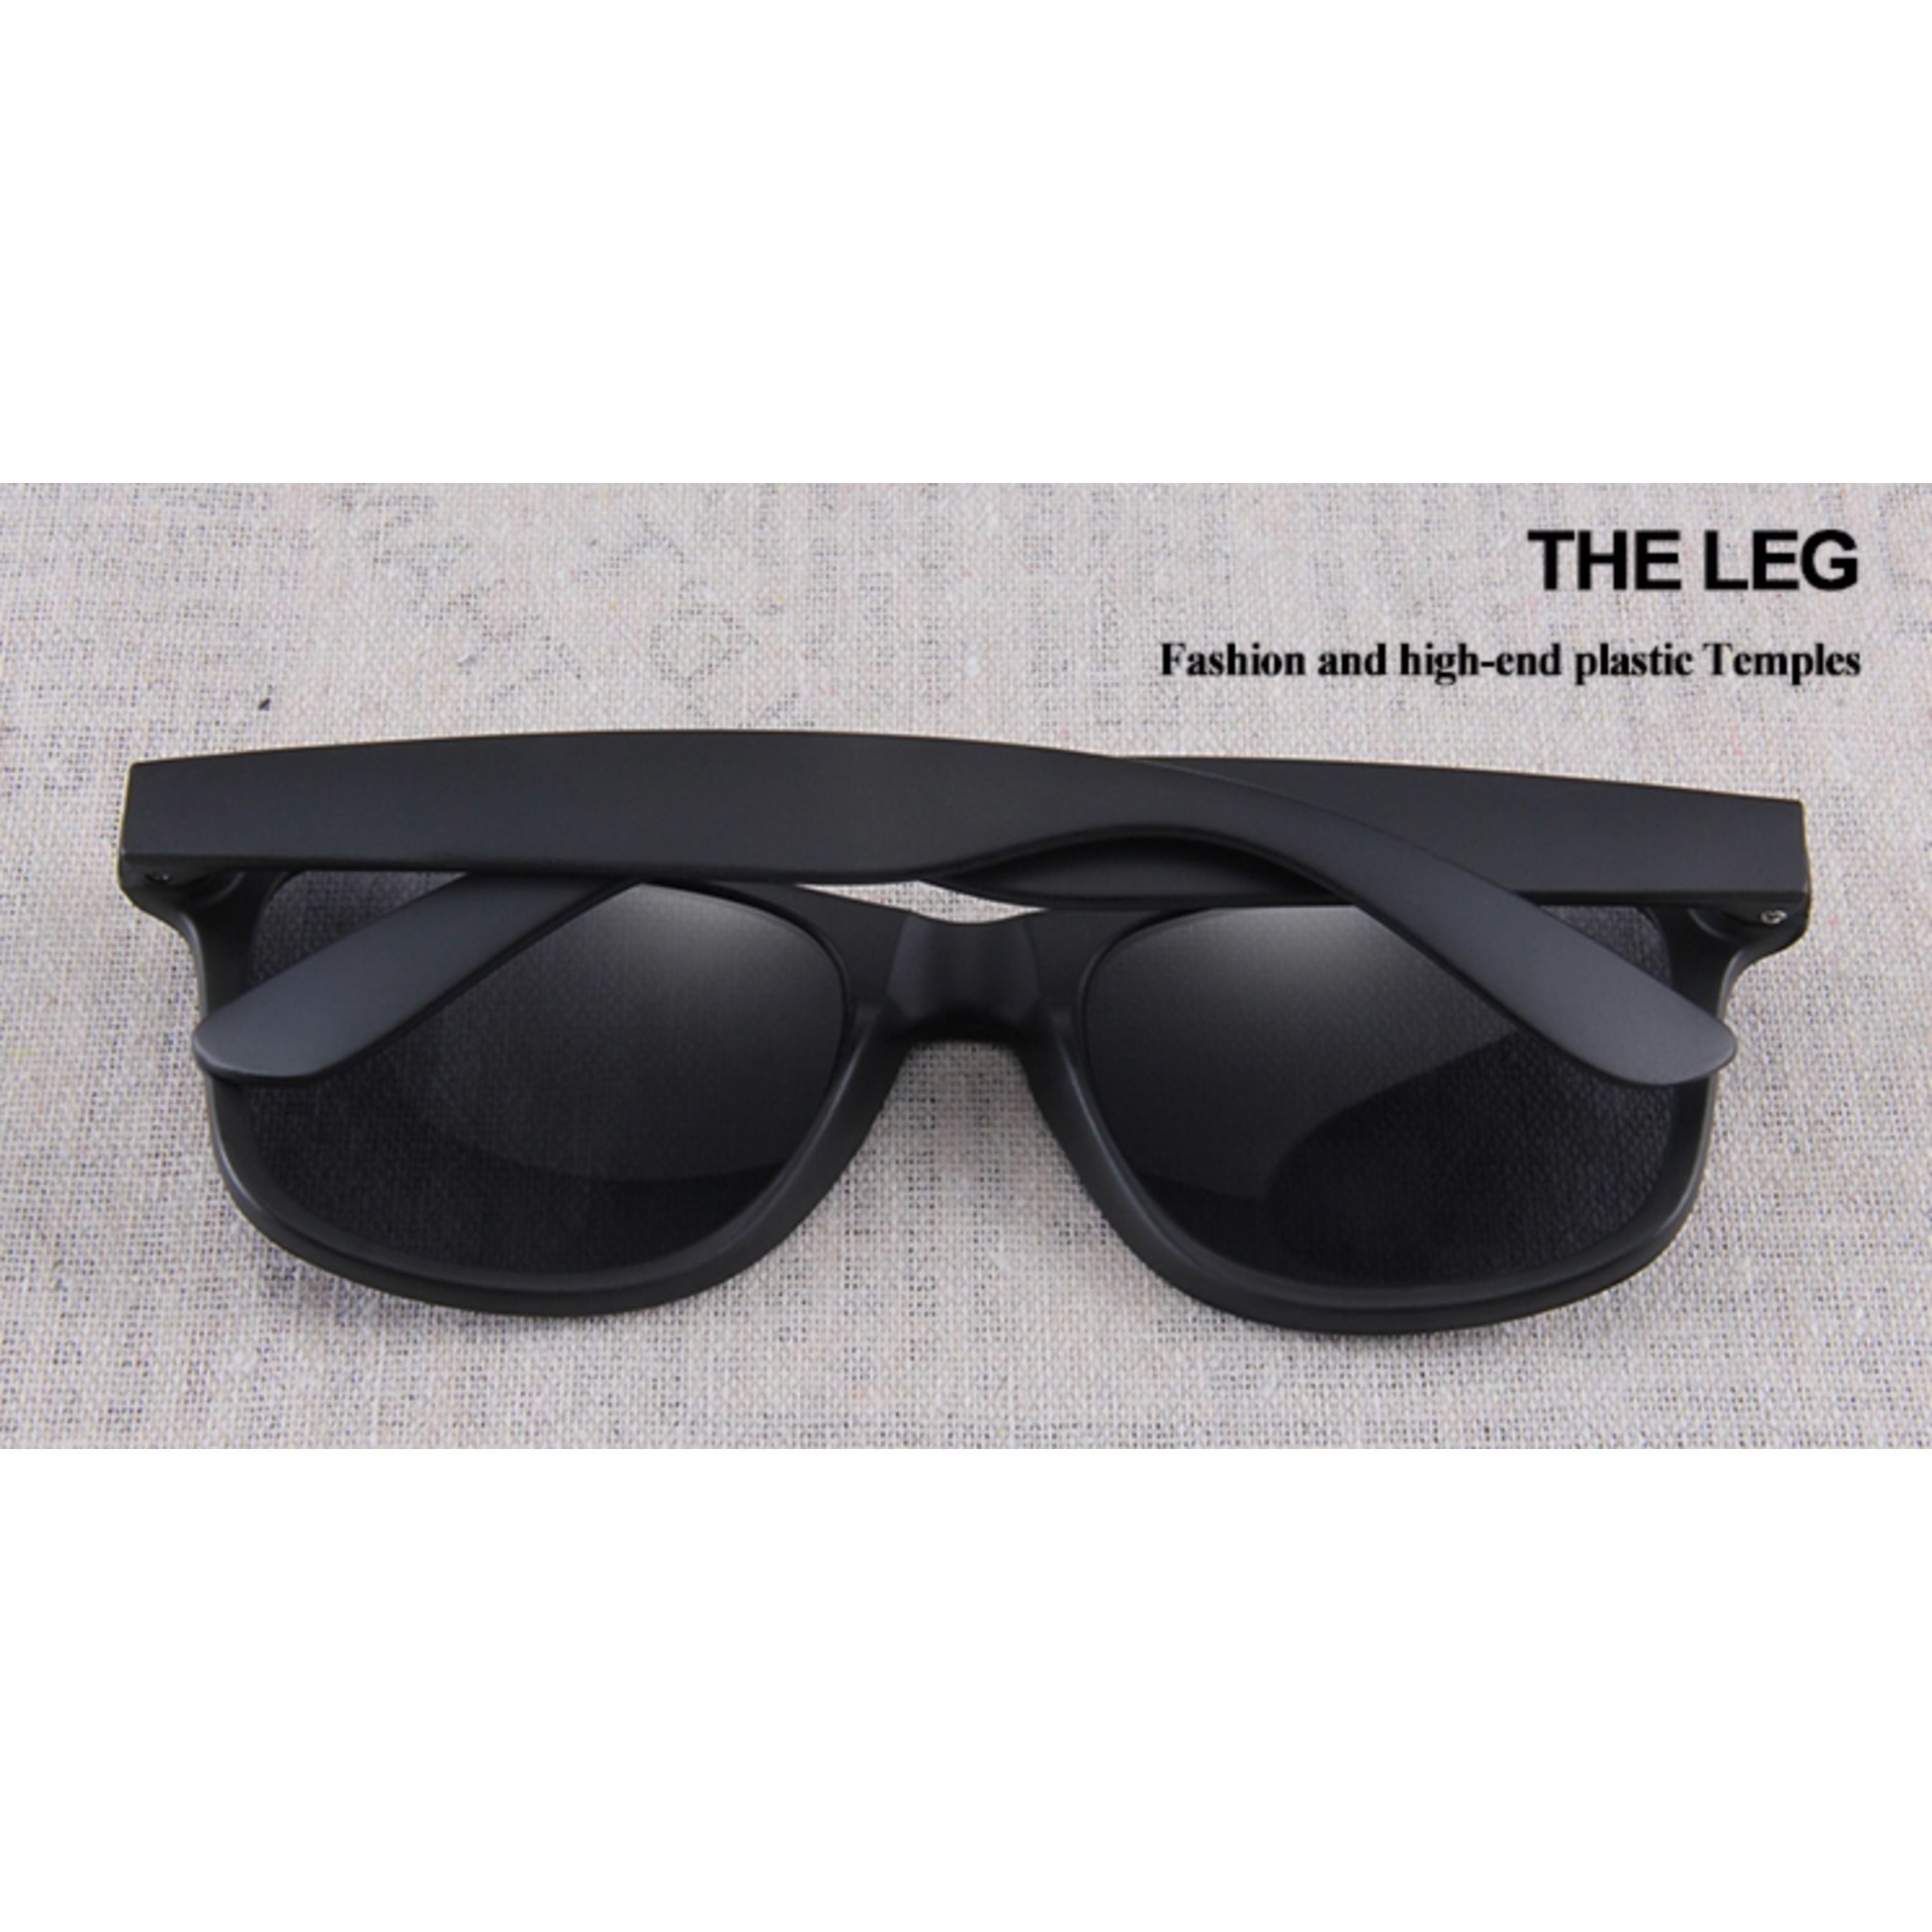 Lorenz Men's Wayfarer Sunglasses 